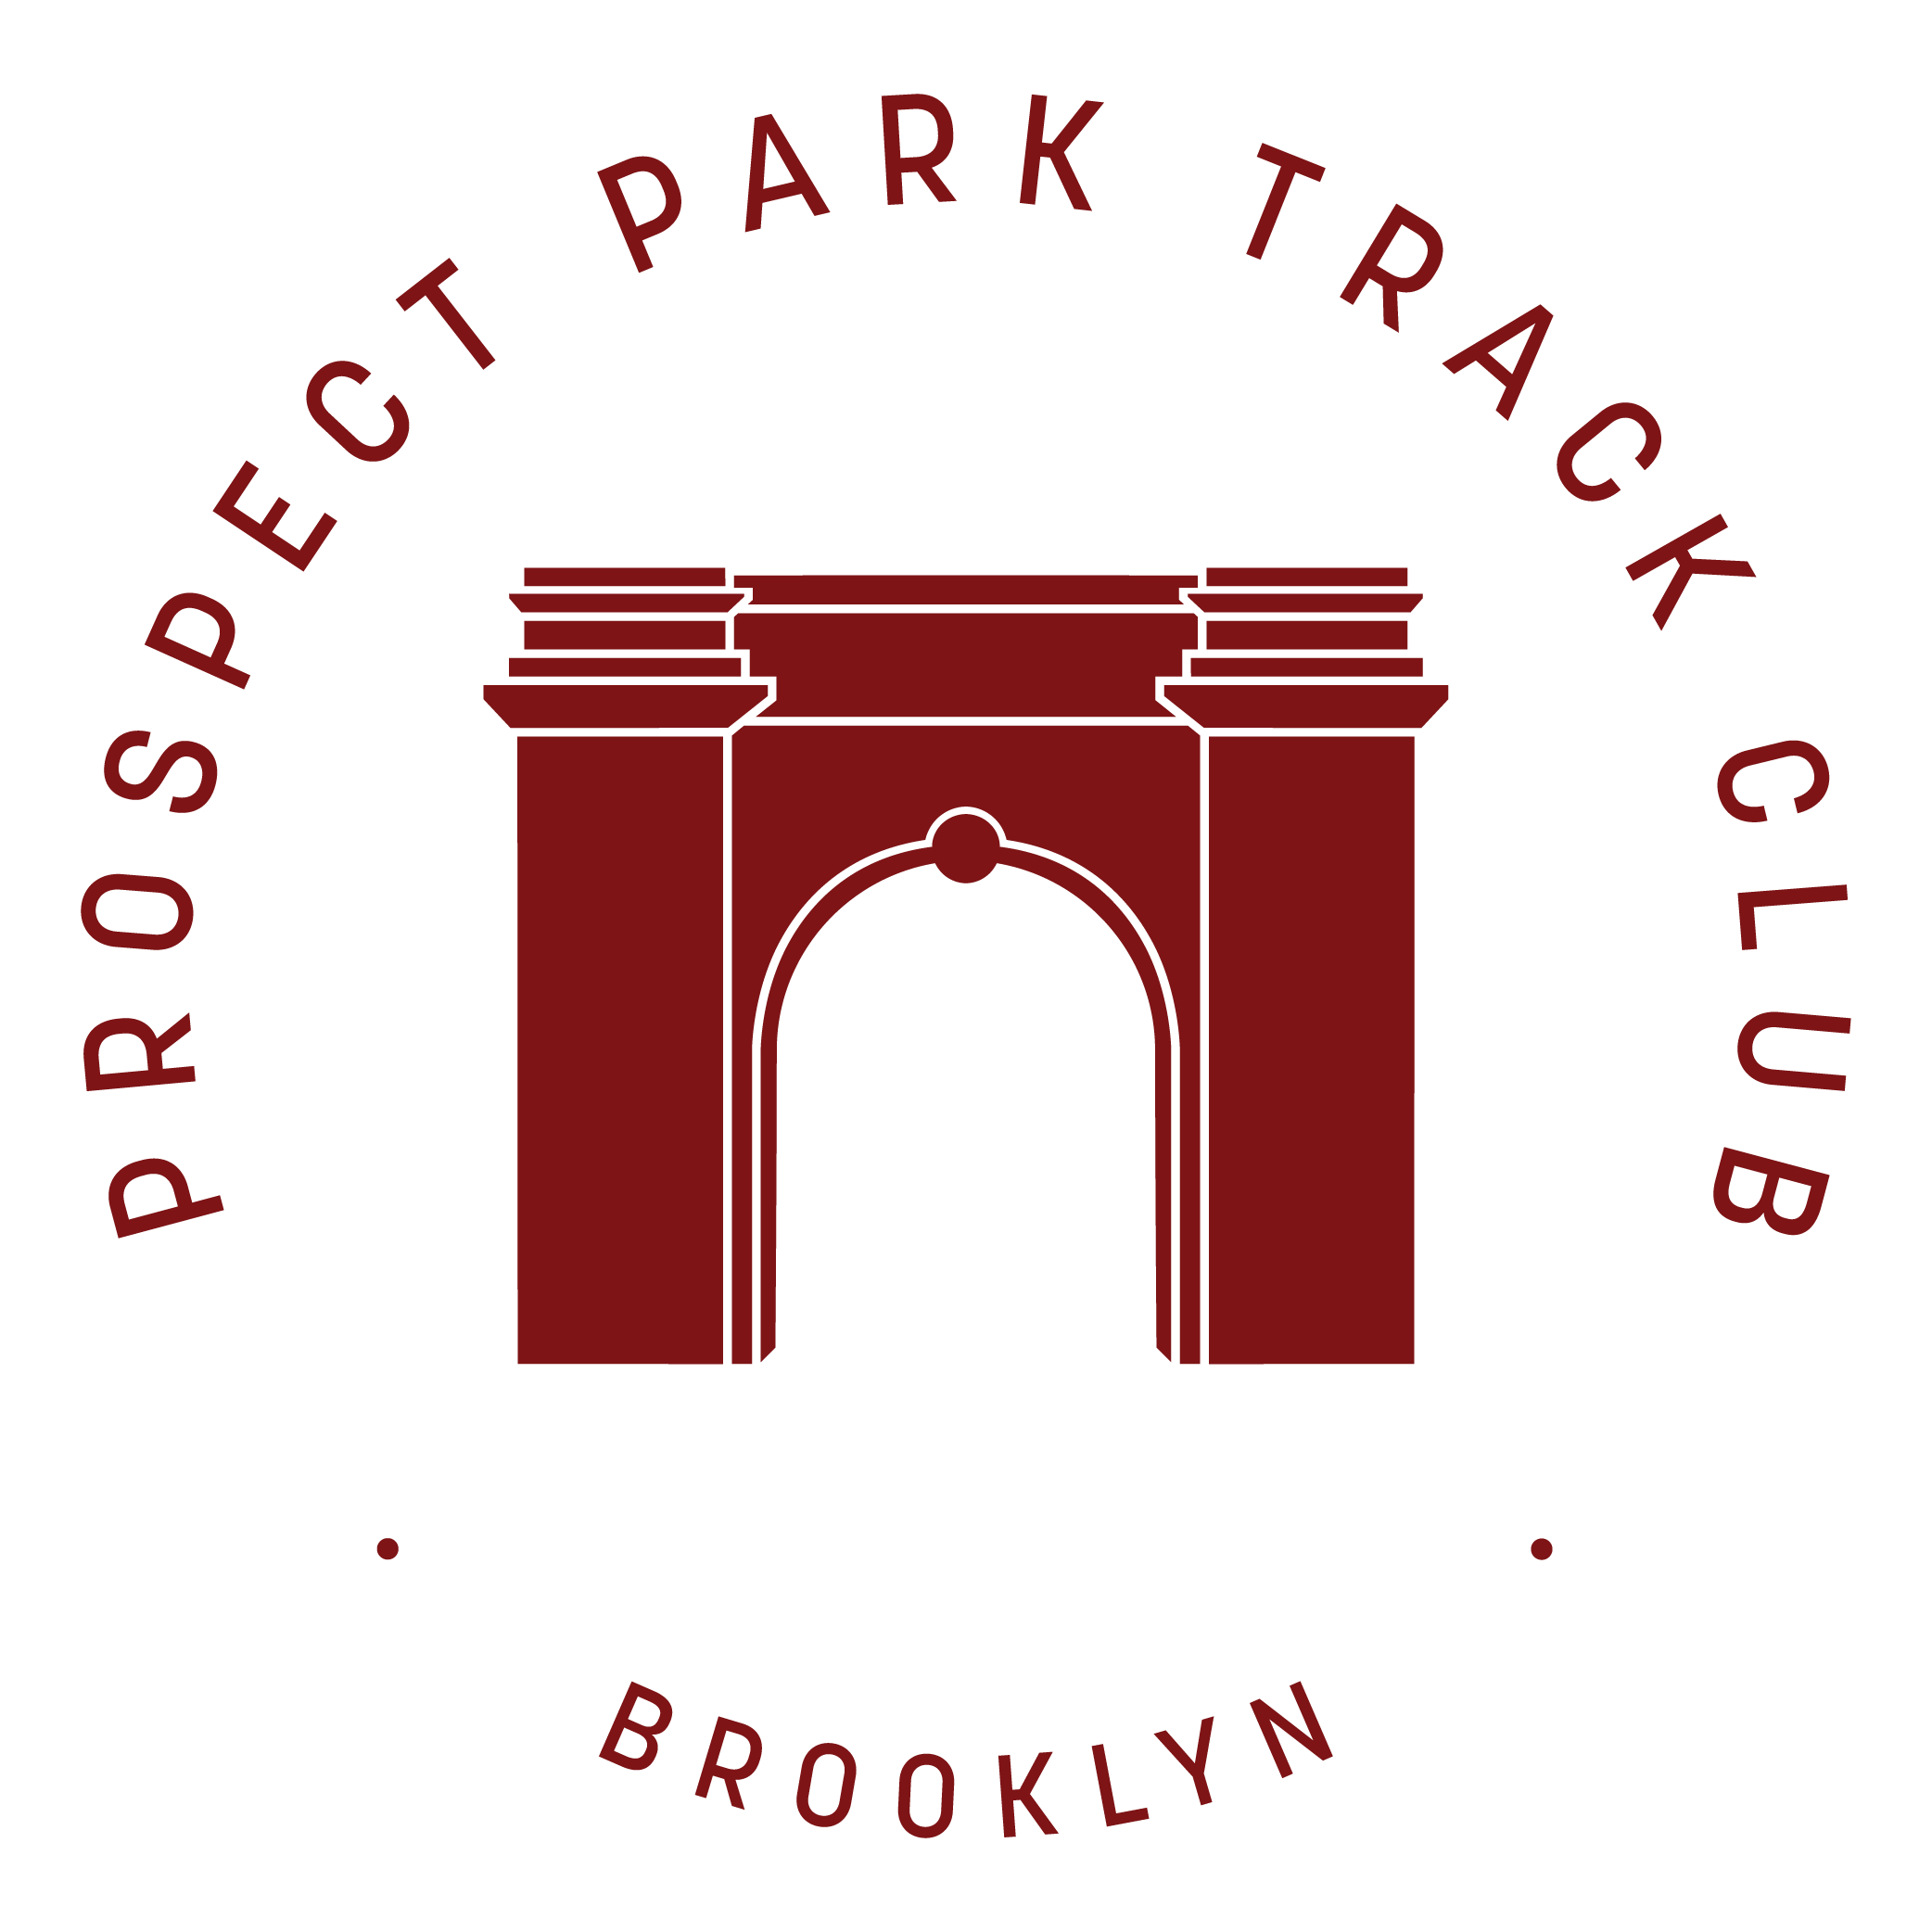 Prospect Park Track Club